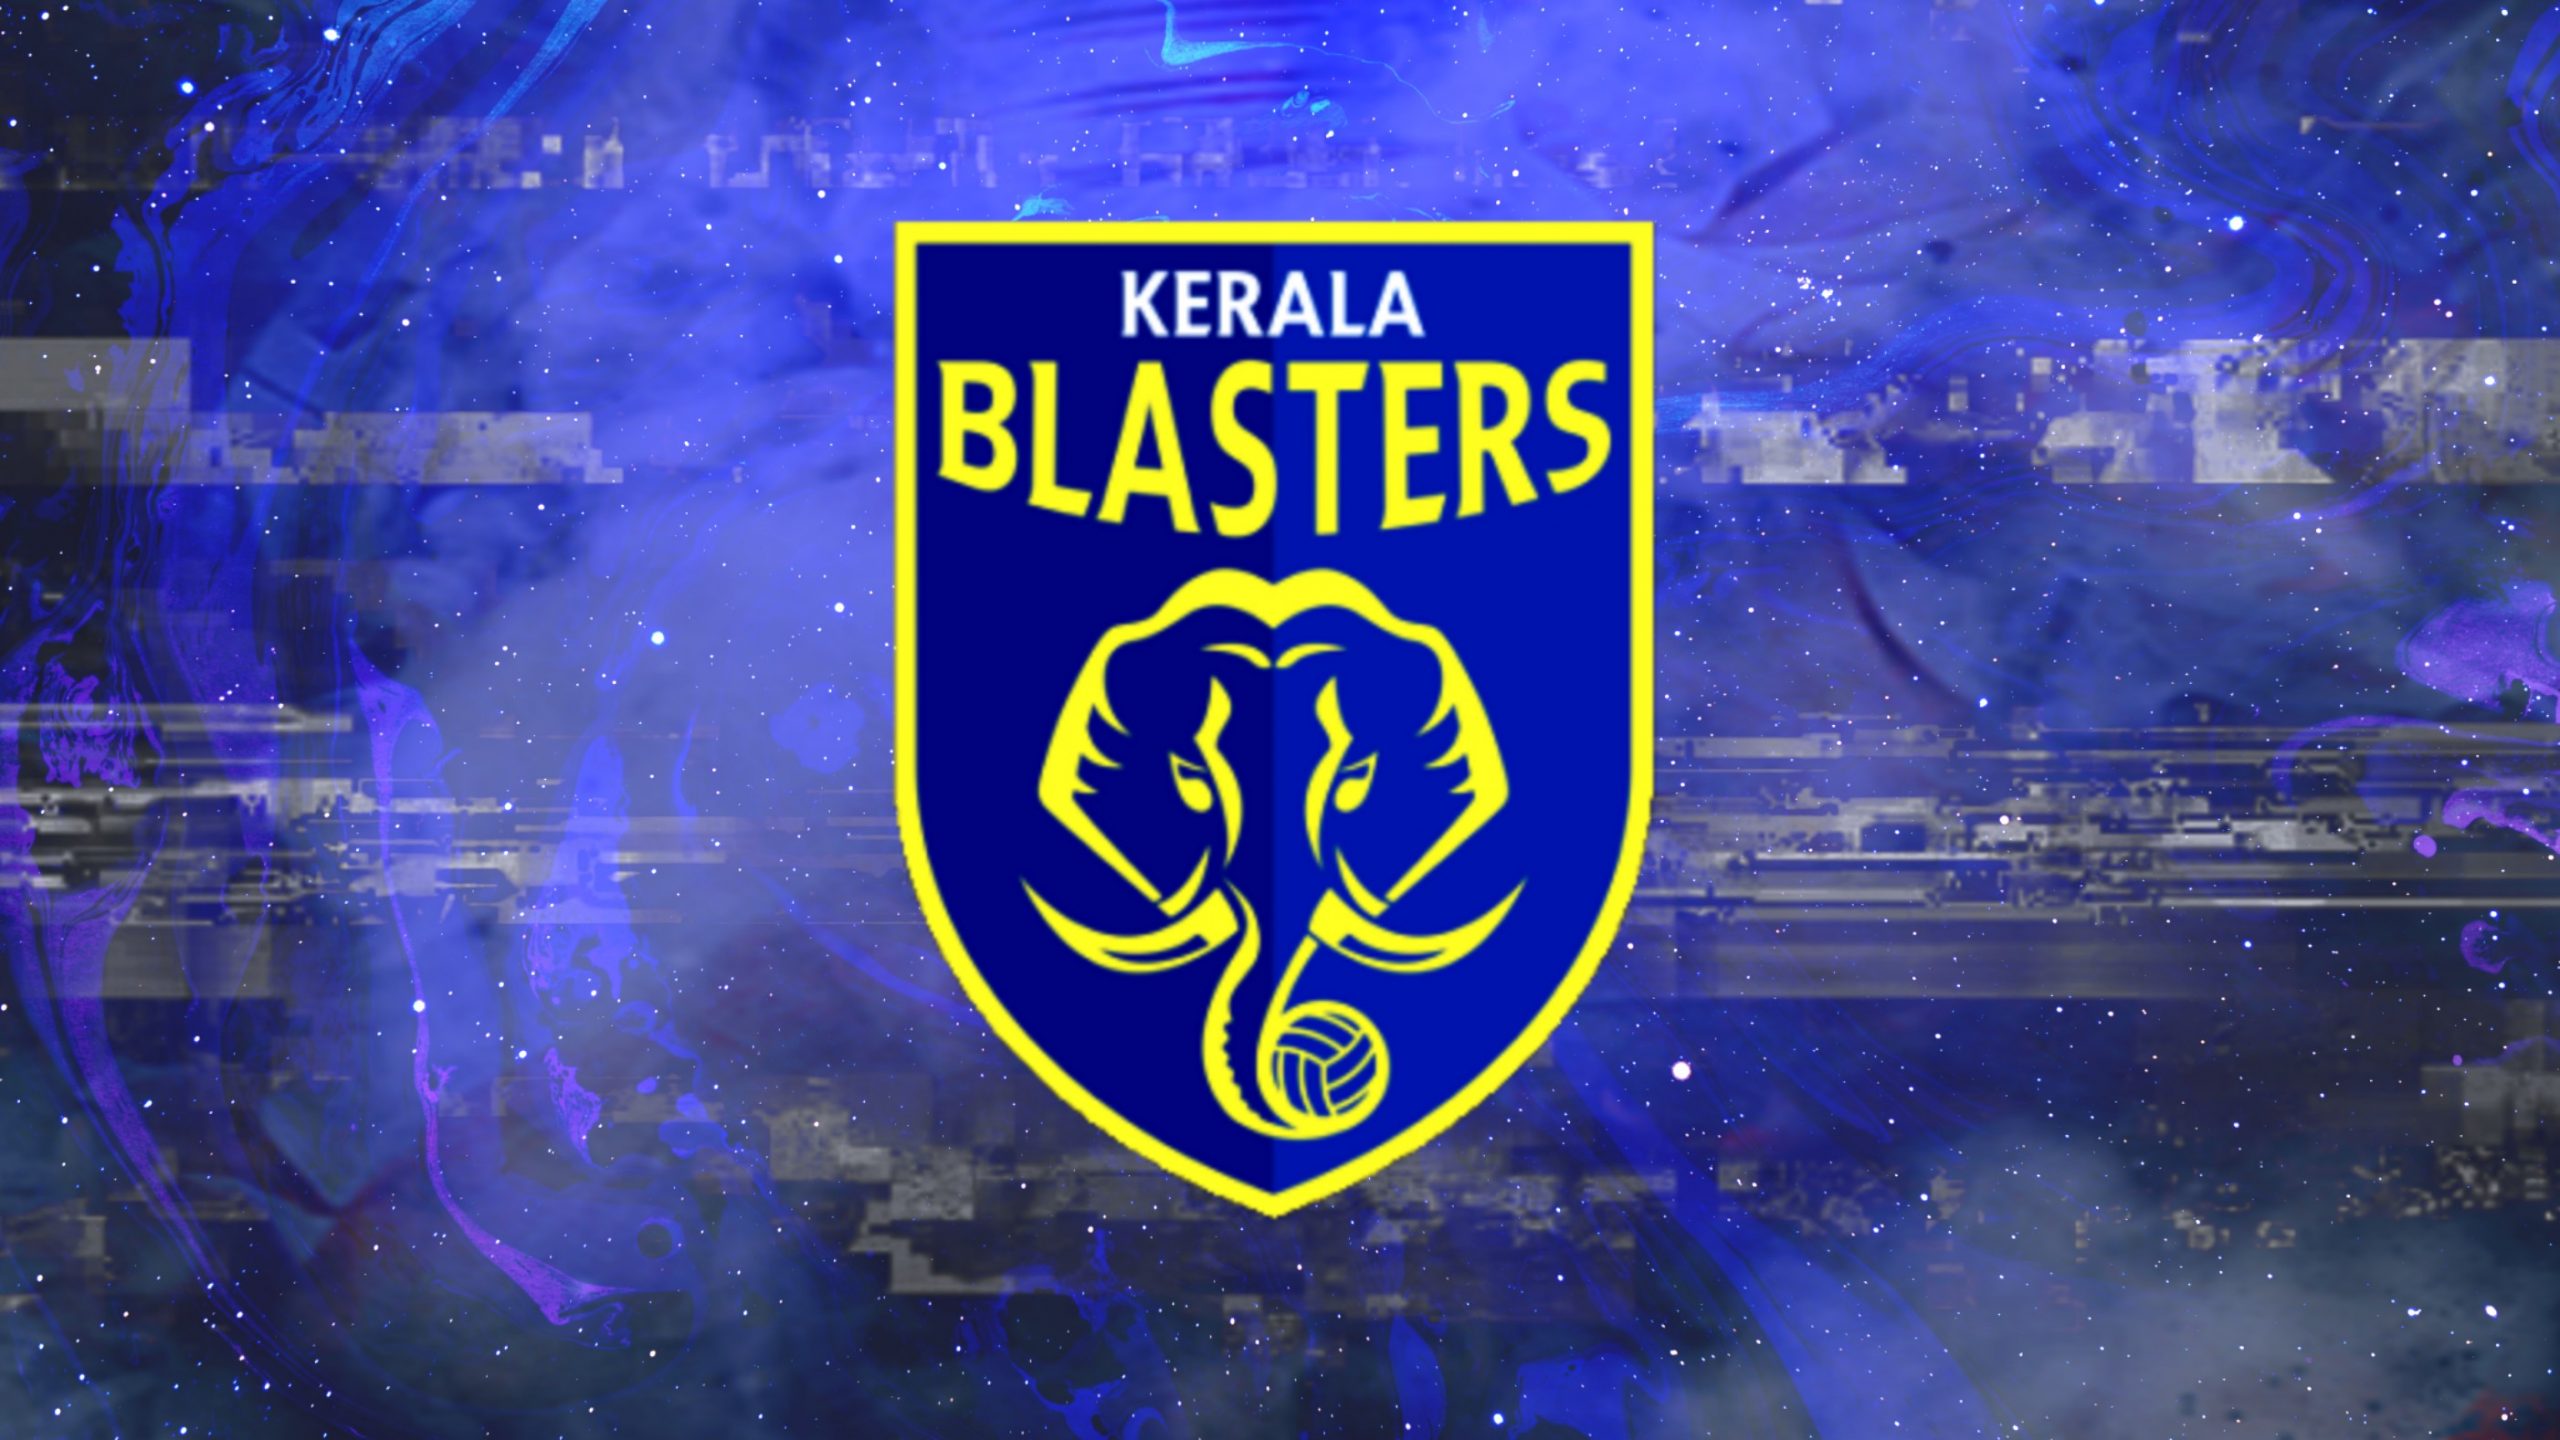 Kerala Blasters Wallpapers - Top 25 Best Kerala Blasters Wallpapers Download